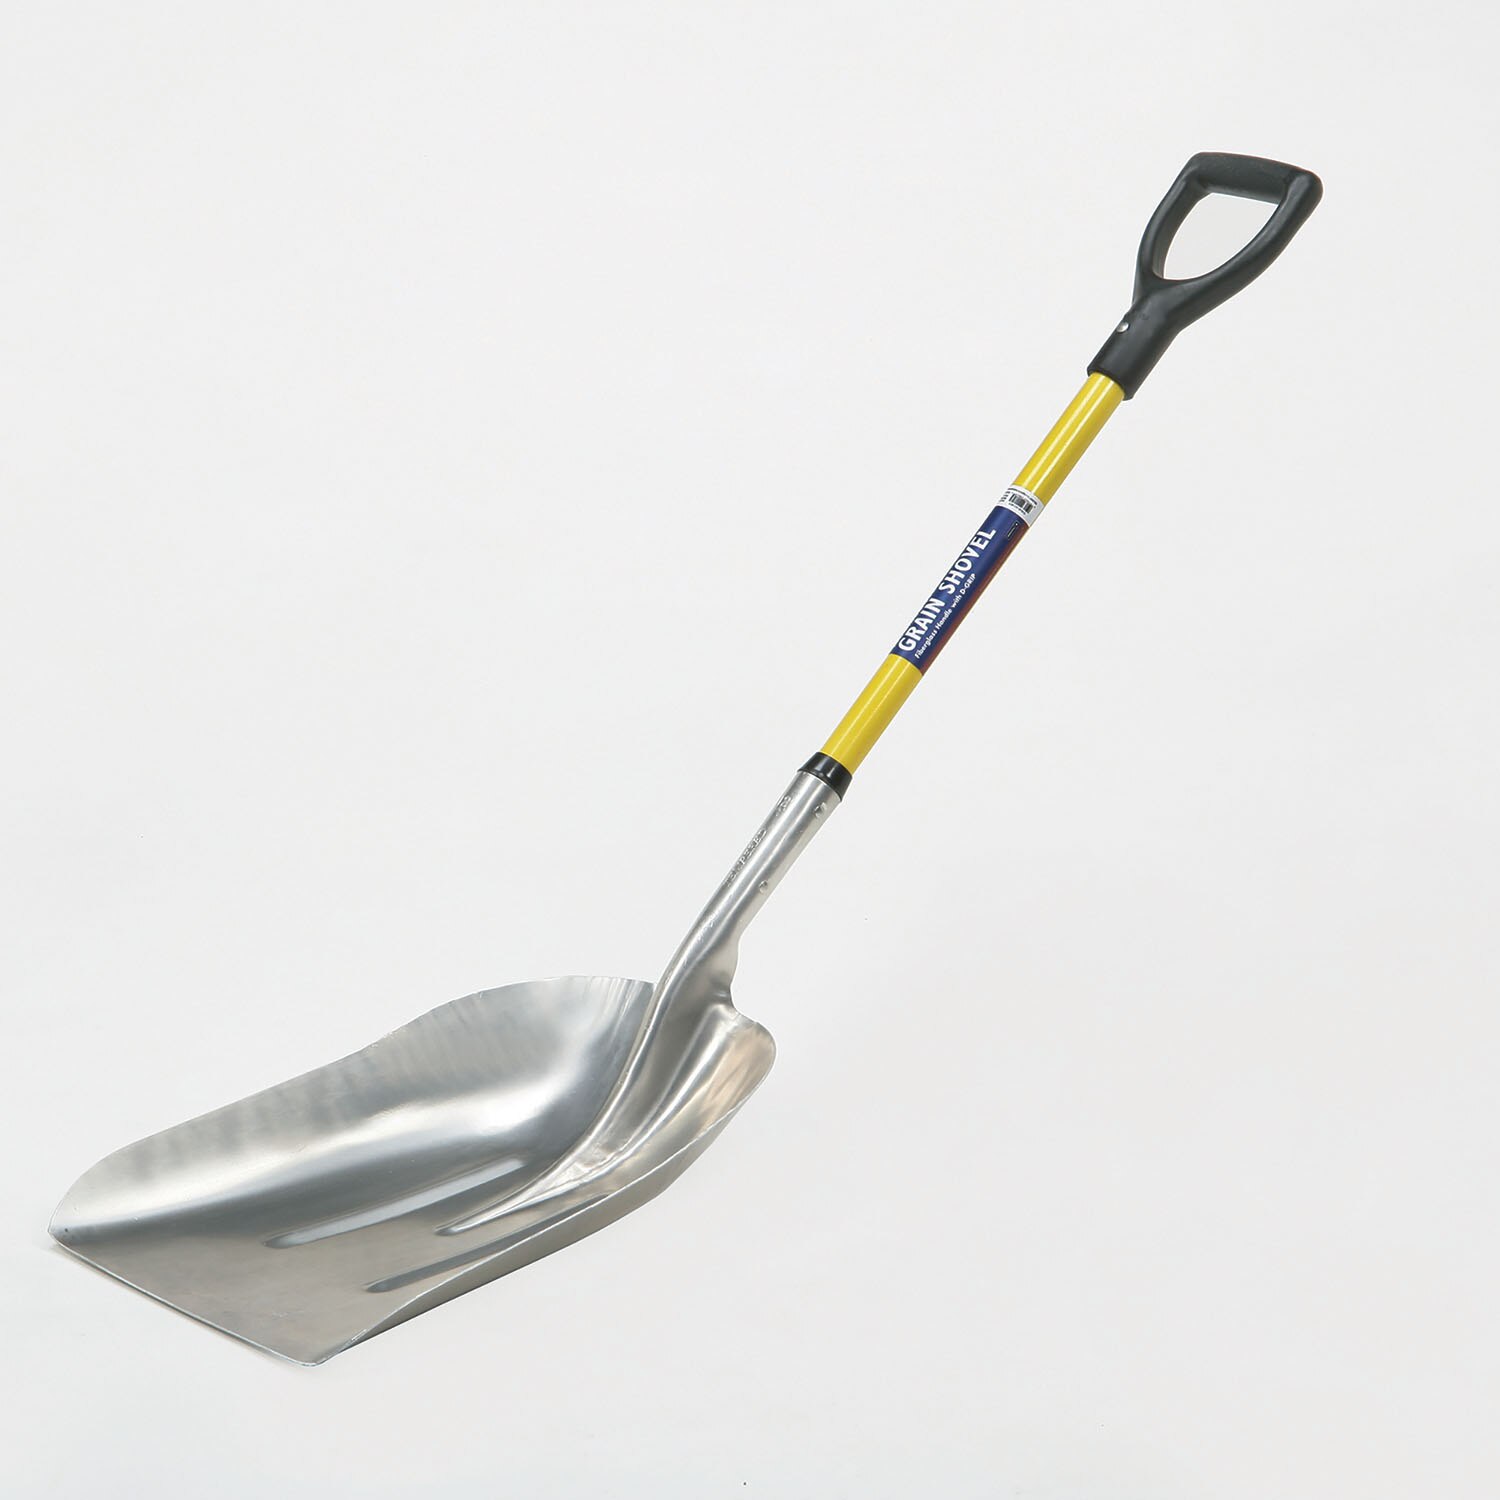 Shovel, Grain, Aluminum Scoop, Industrial grade, 29" Fiberglass Handle, D-grip